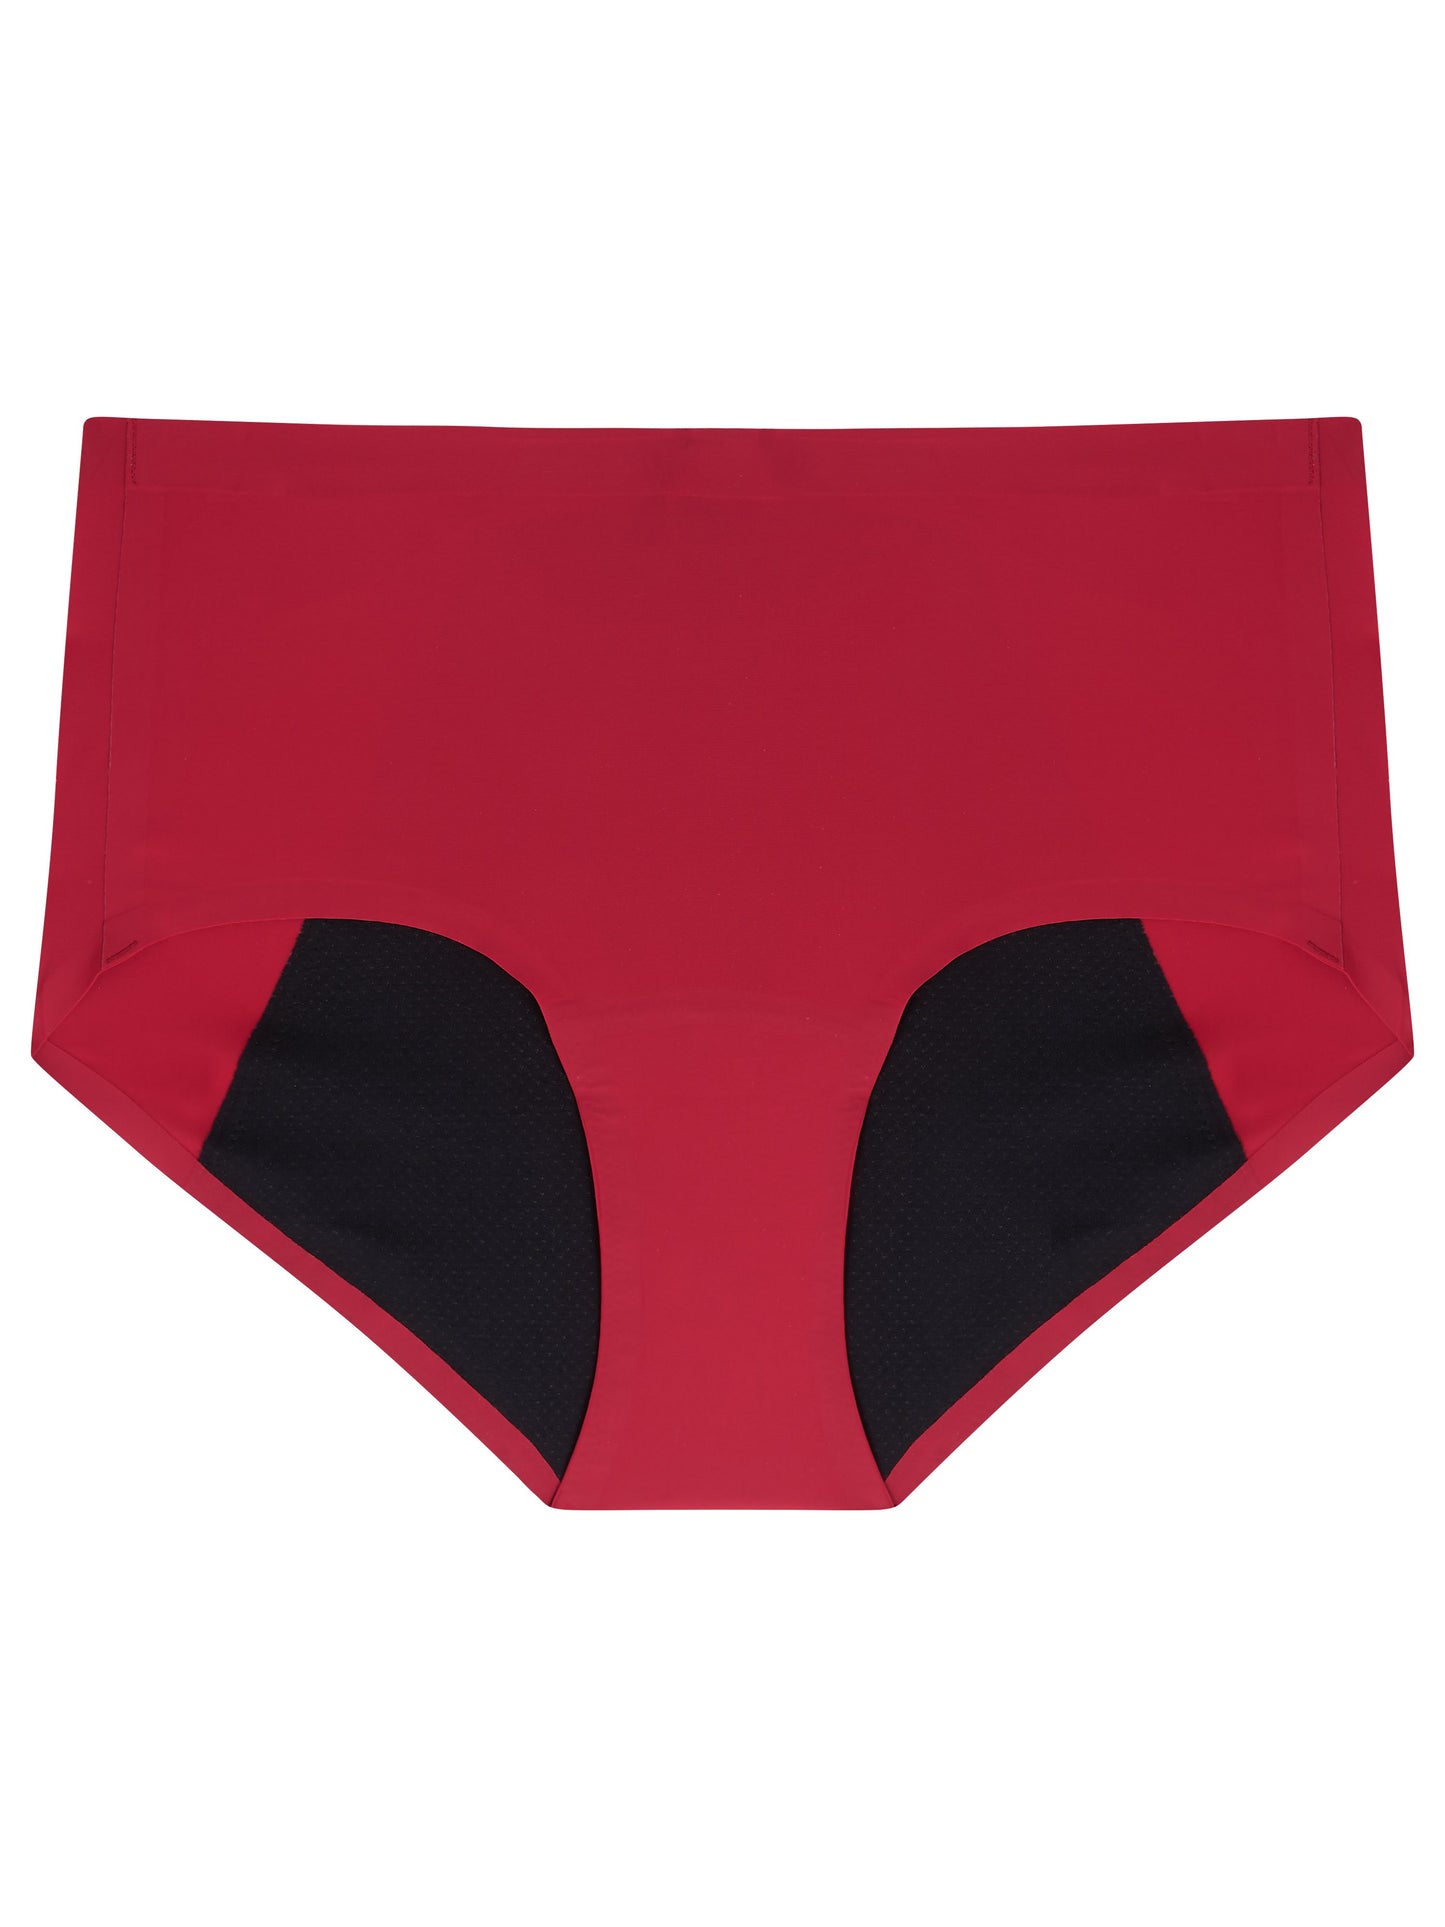 Imaara Feminine Period Underwear Inclusive Knickers. Product Serma Poppy